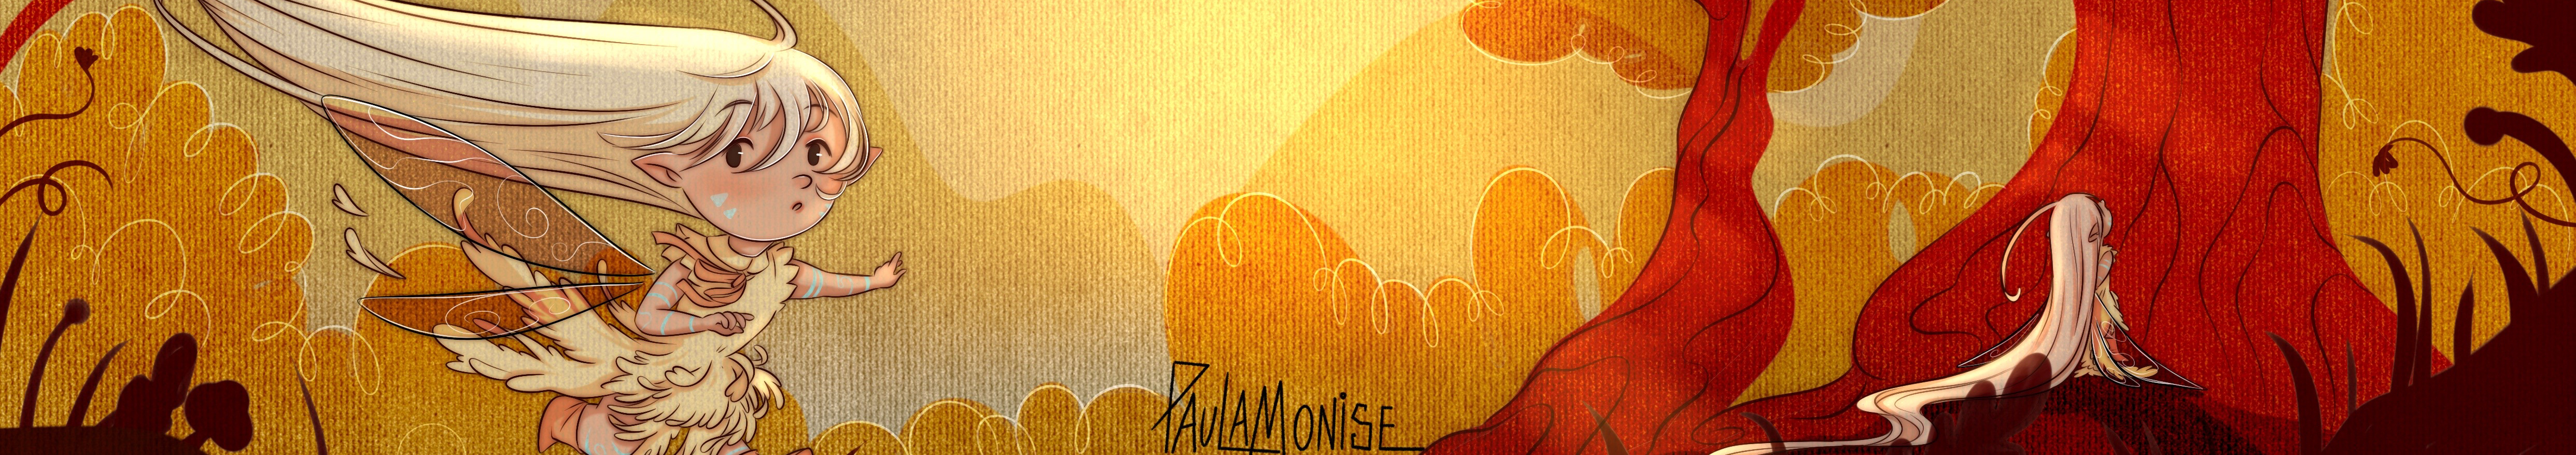 Paula Monise Baudelaire's profile banner